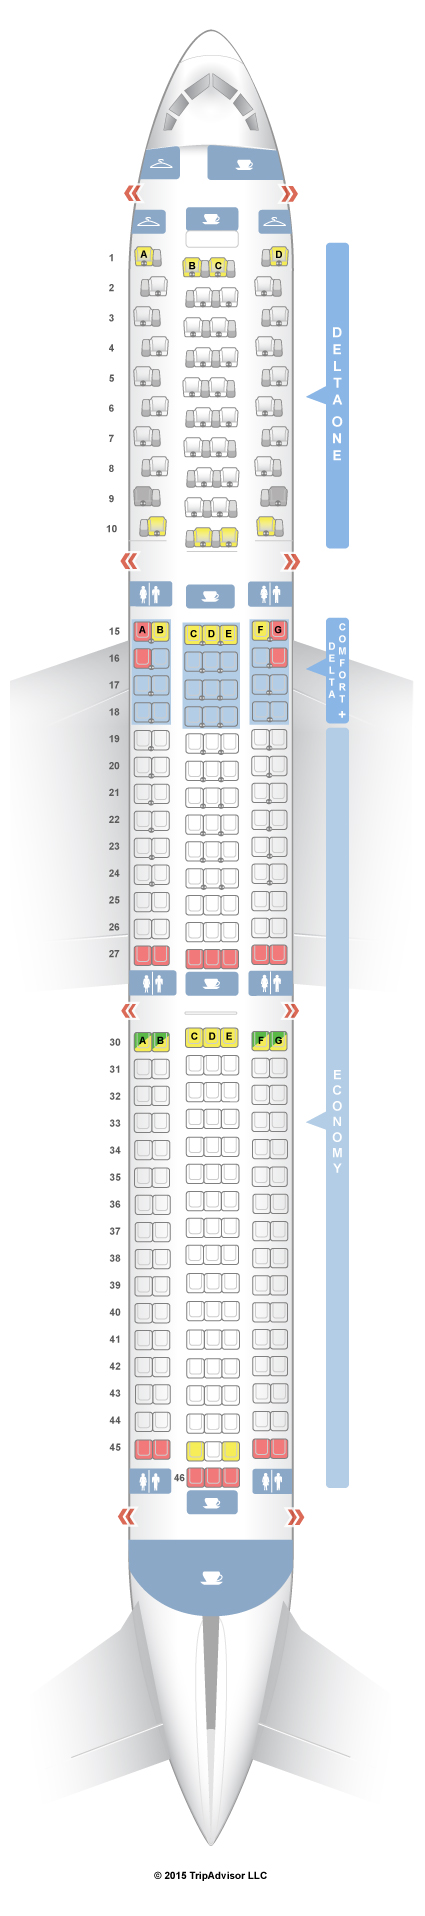 Delta 787 Seat Map